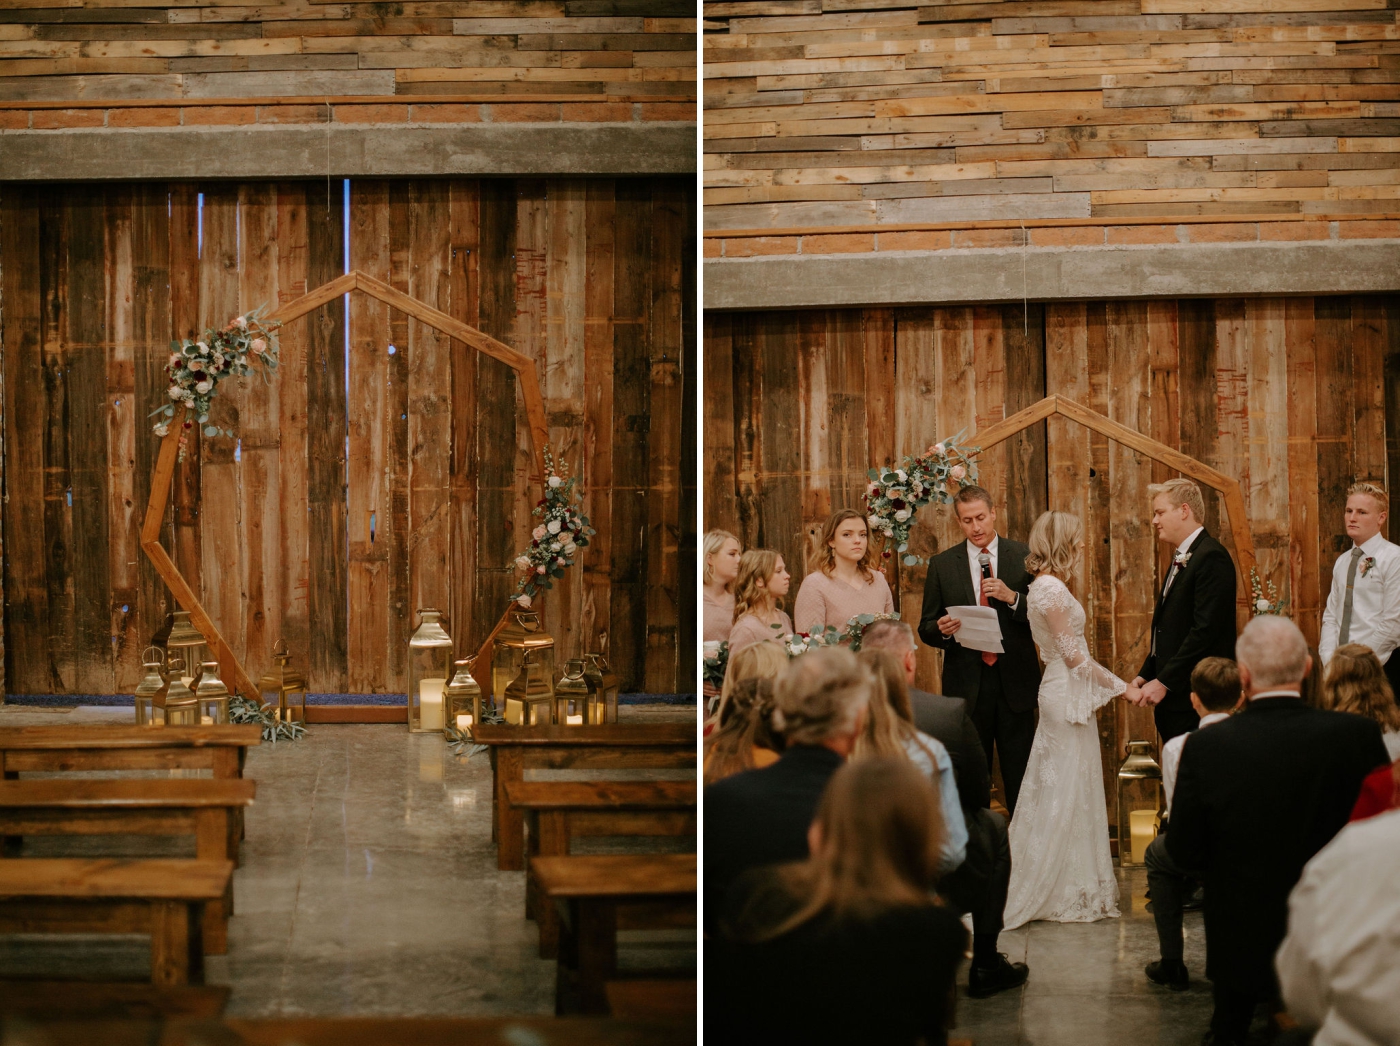 Rustic indoor wedding venues in Arizona